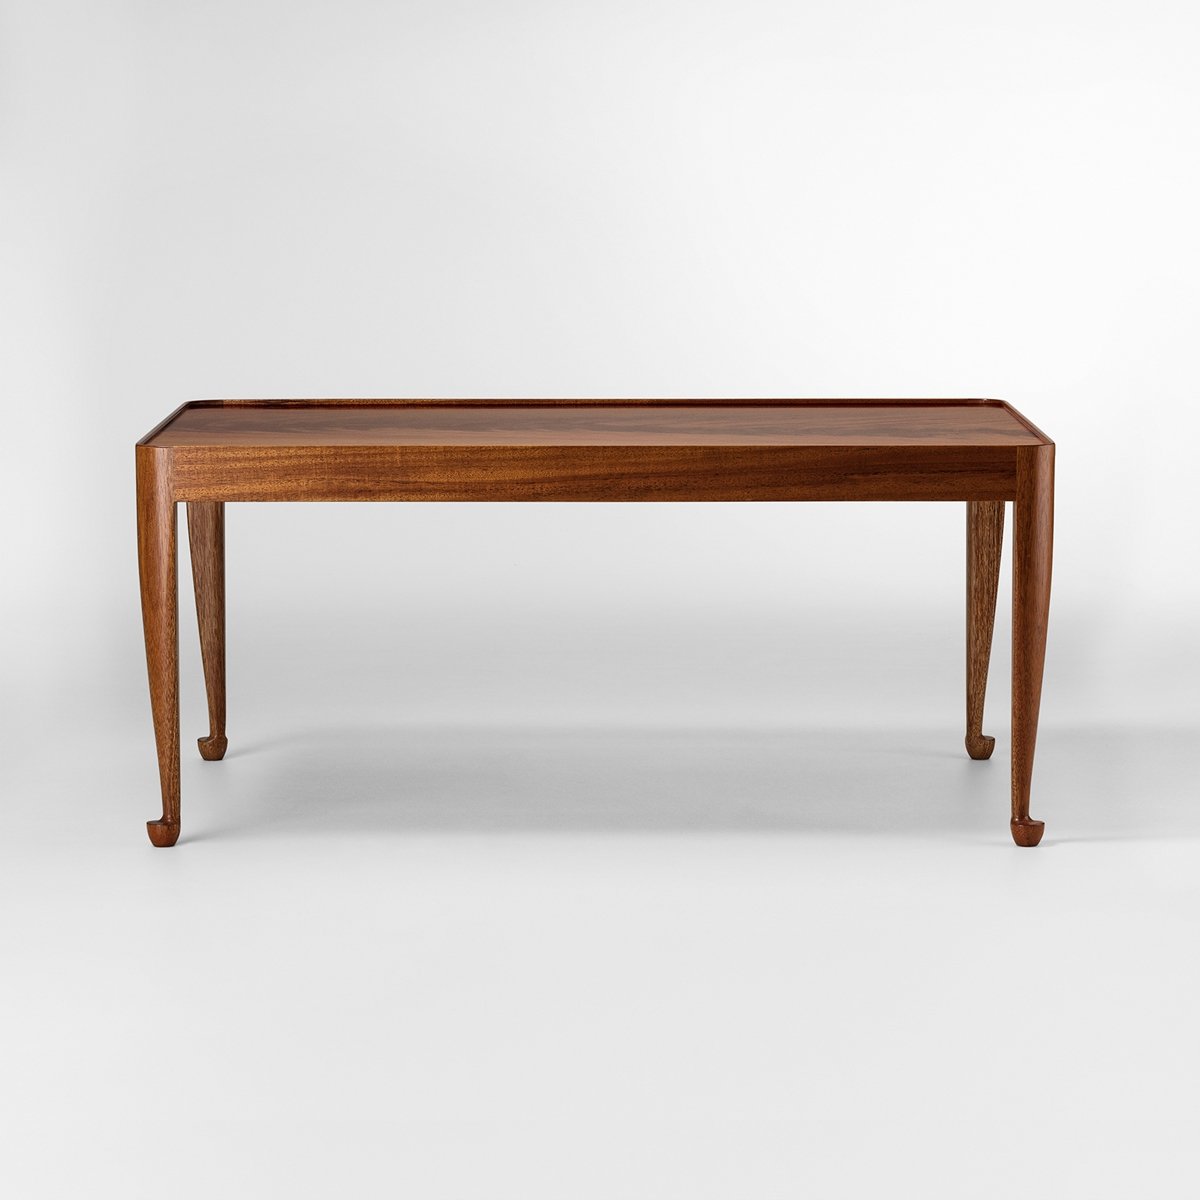 Coffee Table 2073 - Svenskt Tenn Online - Width 70 cm, Length 110 cm, Legs in mahogany, table top in pyramid mahogany, Josef Frank